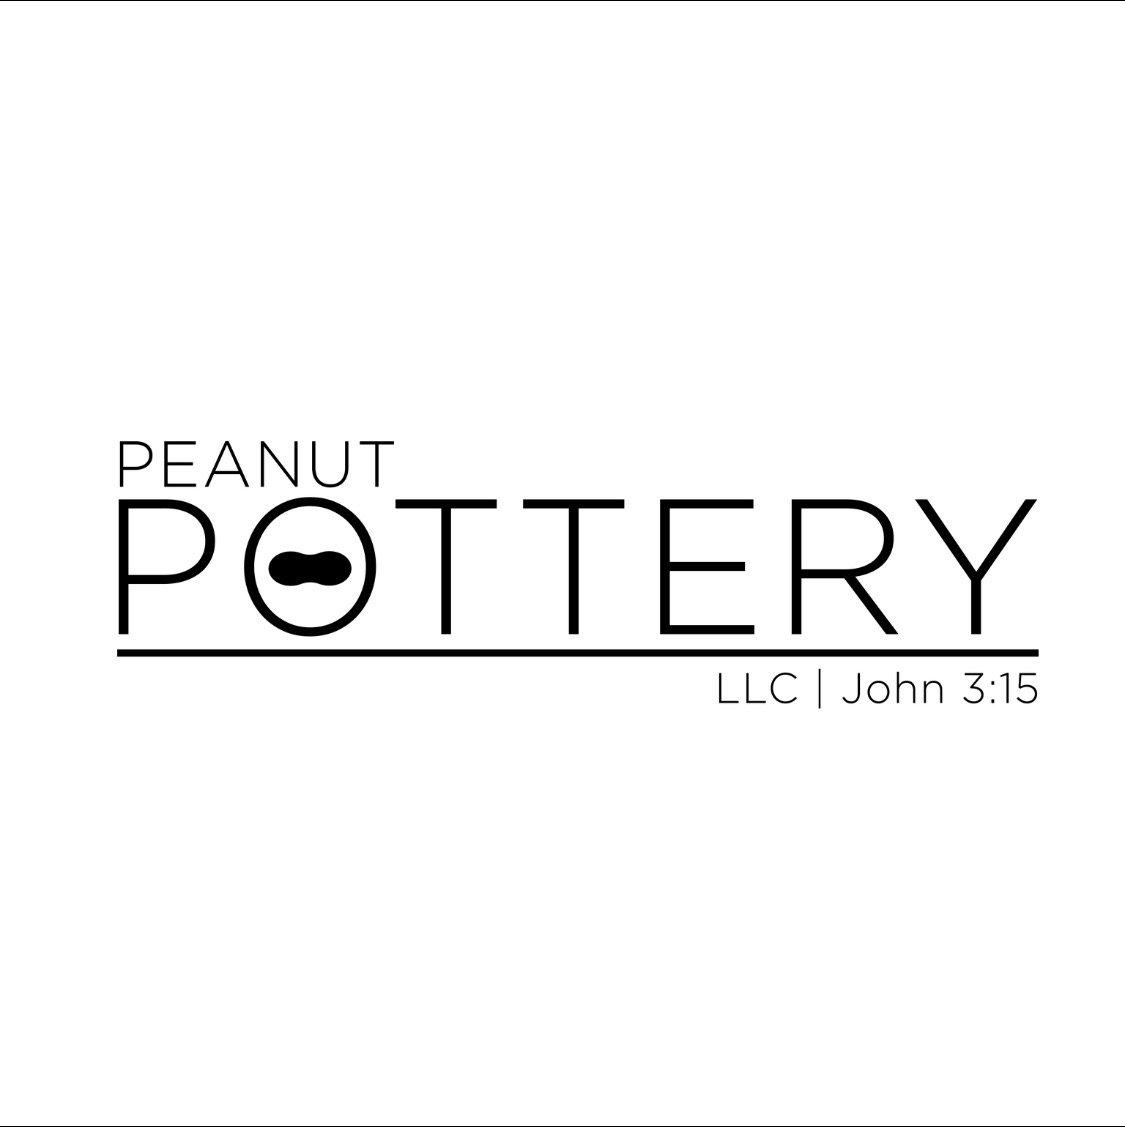 Peanut Pottery LLC's account image